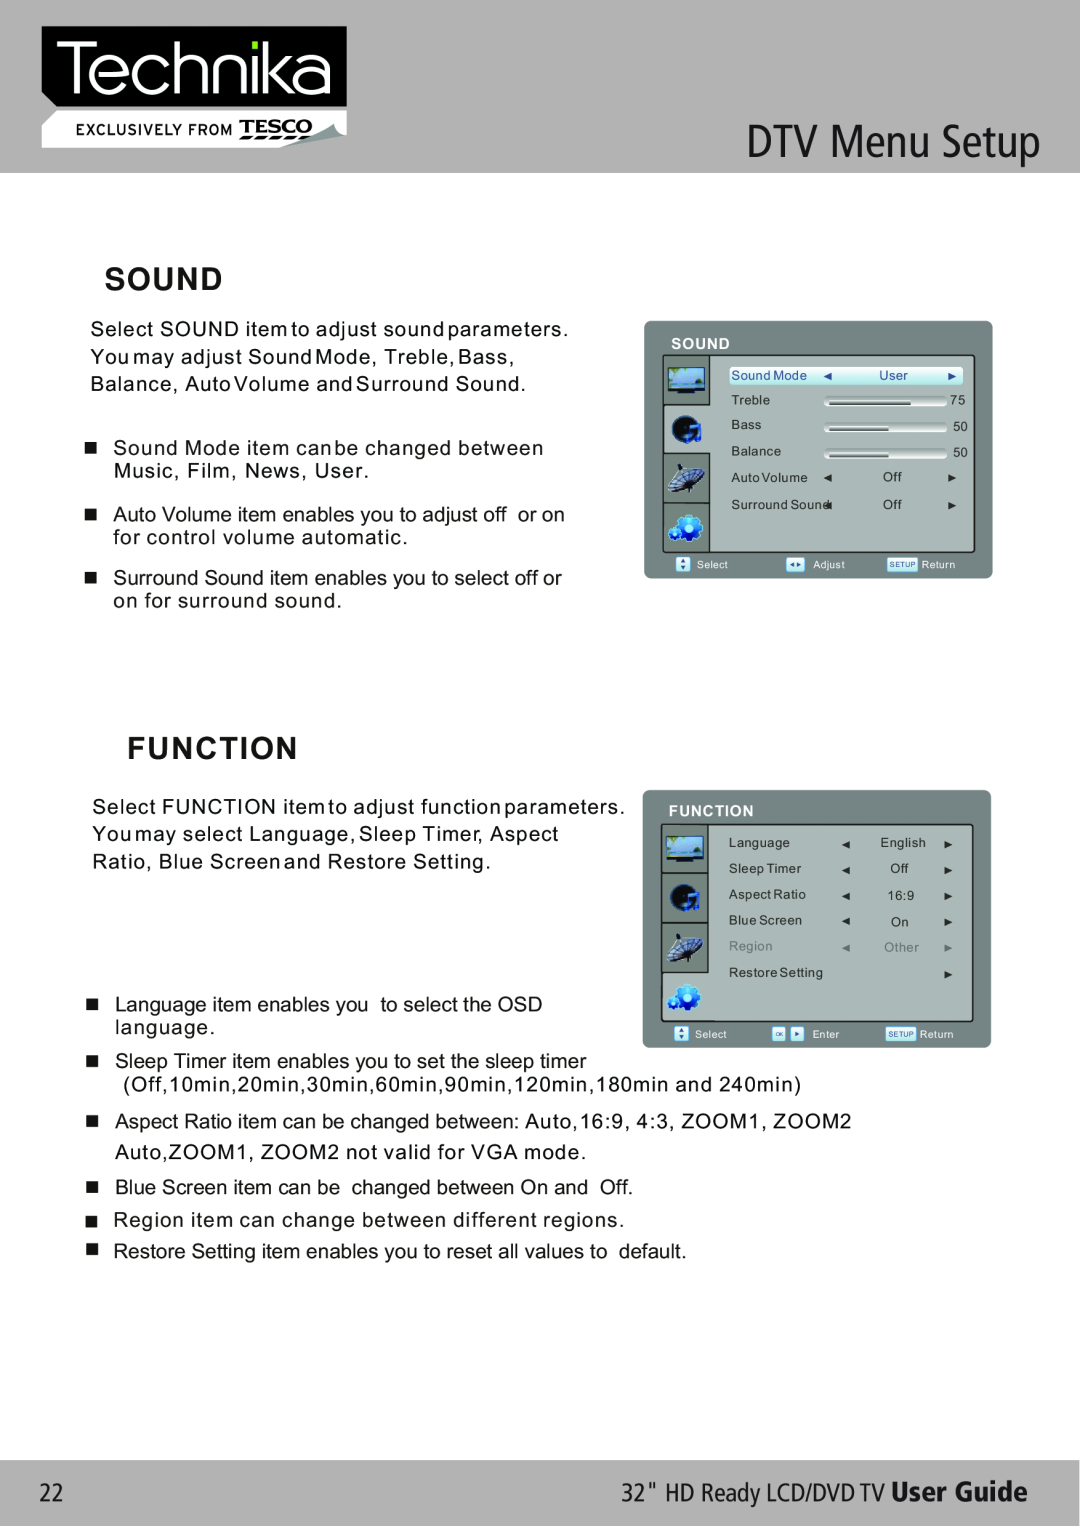 Technika 32-612 manual Sound, Function, DTV Menu Setup, HD Ready LCD/DVD TV User Guide 